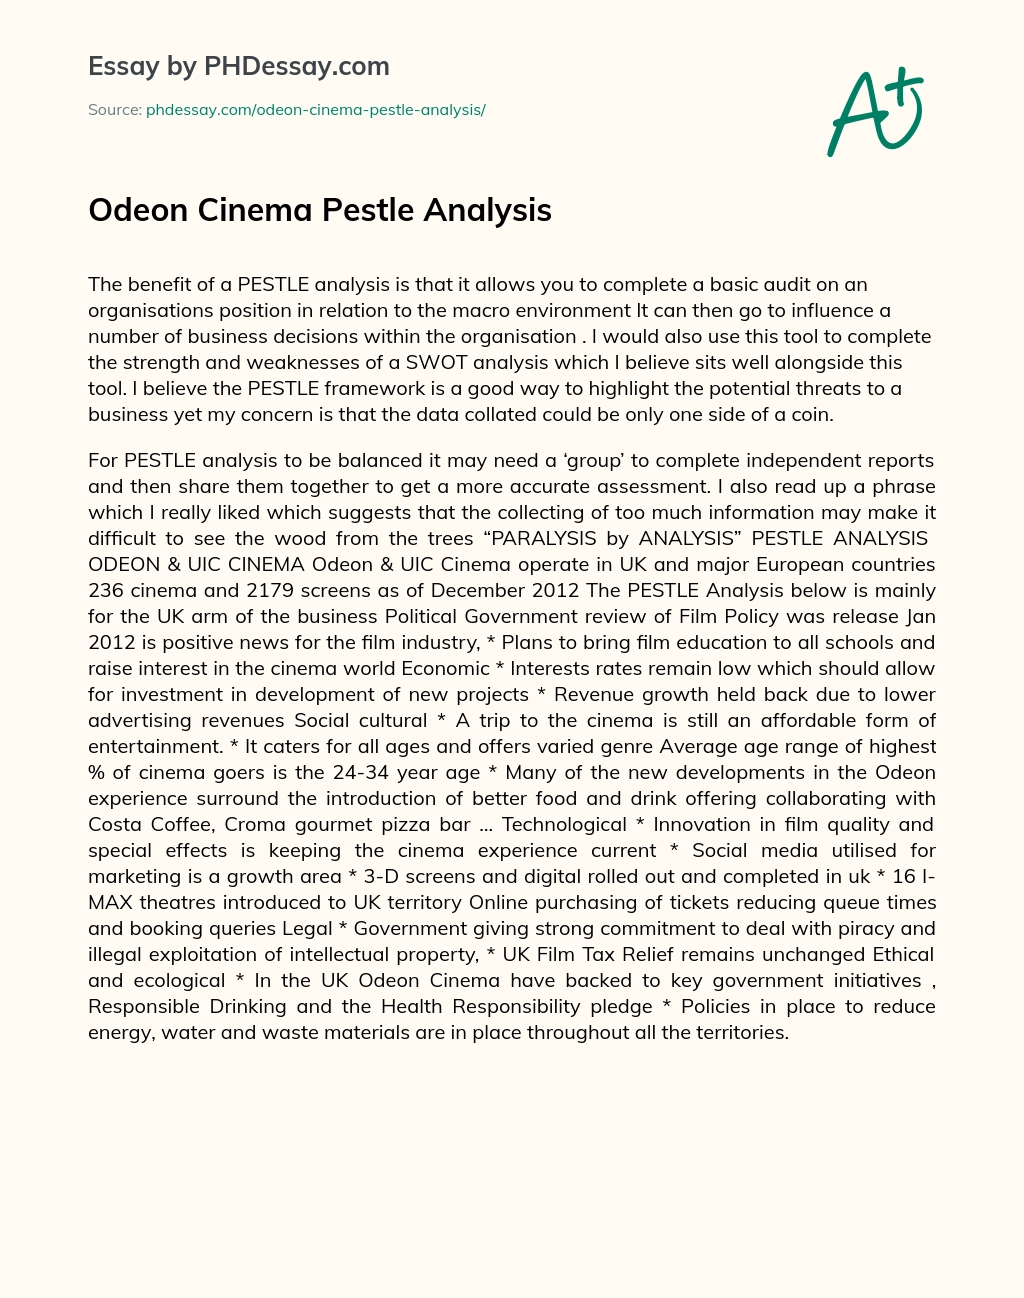 Odeon Cinema Pestle Analysis essay